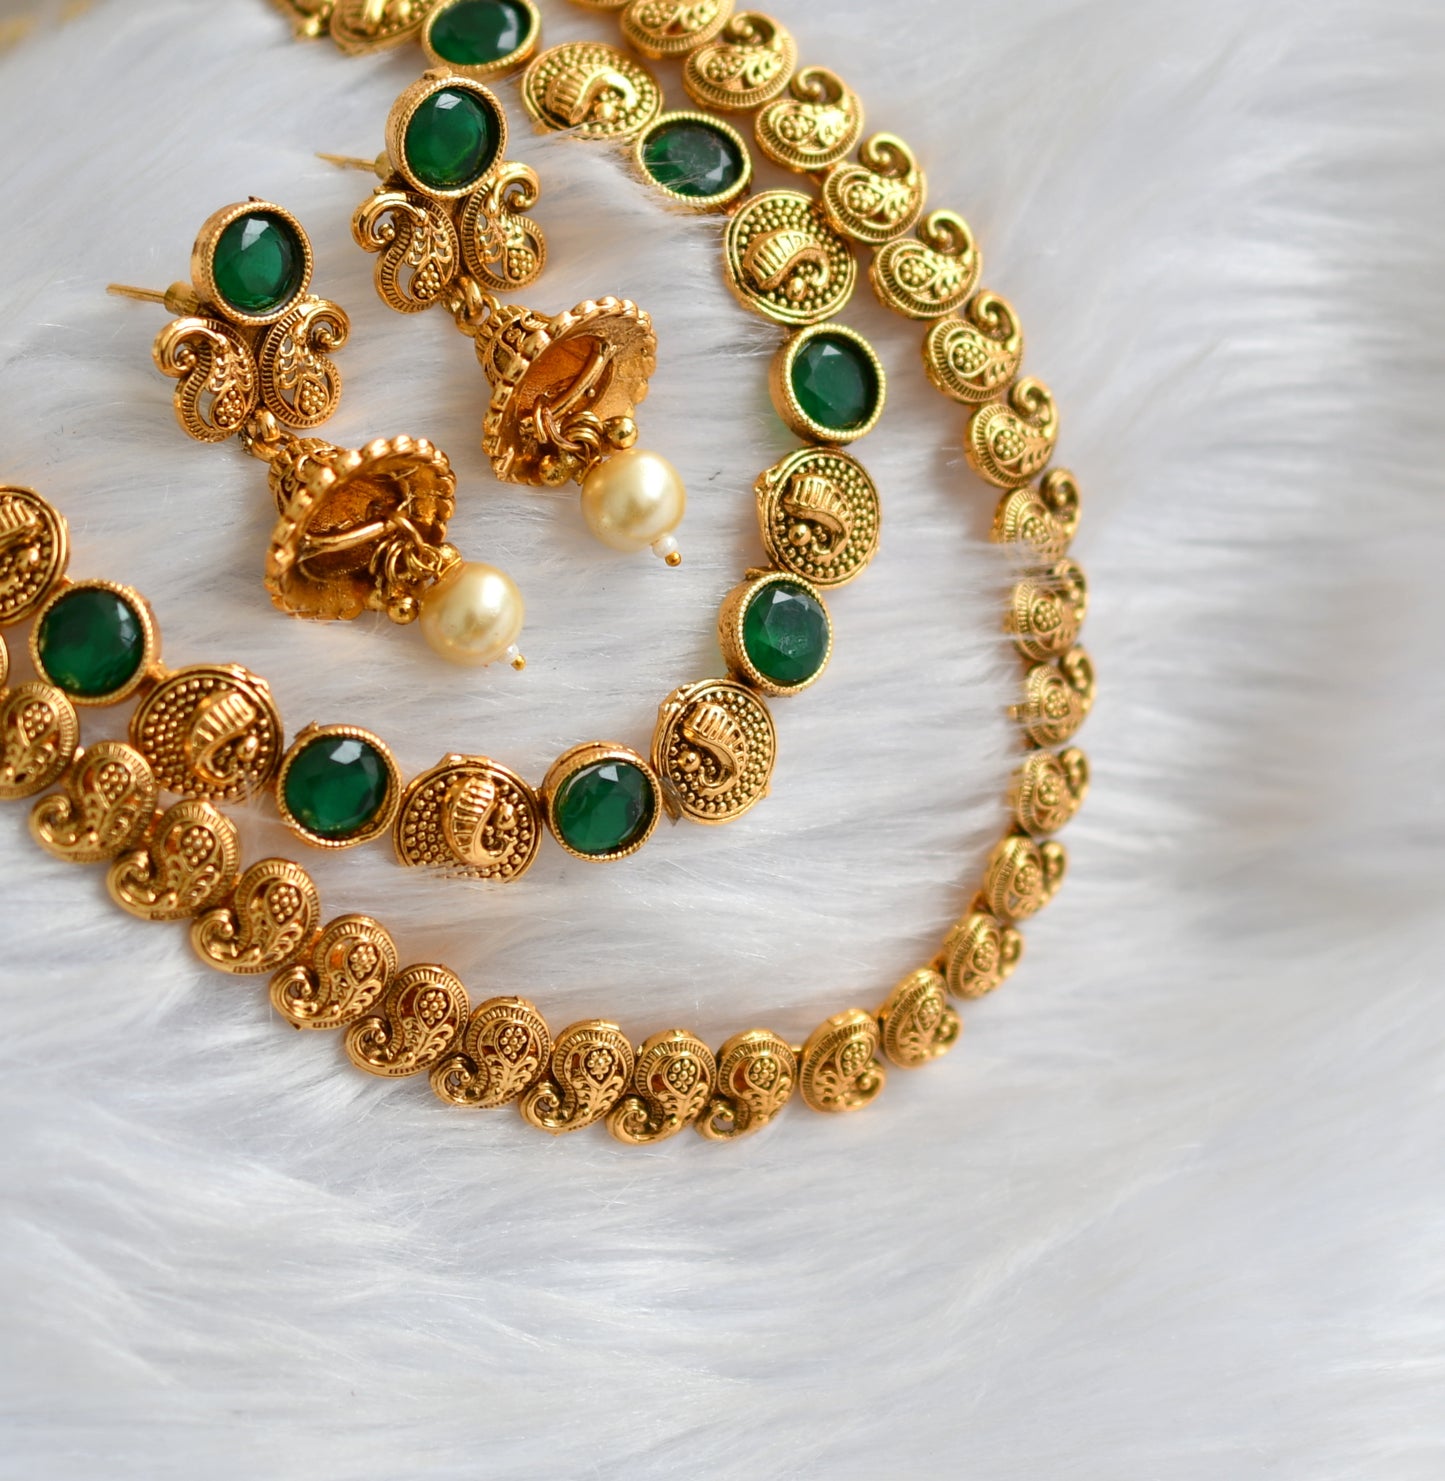 Antique gold tone green mango double layer necklace set dj-39688